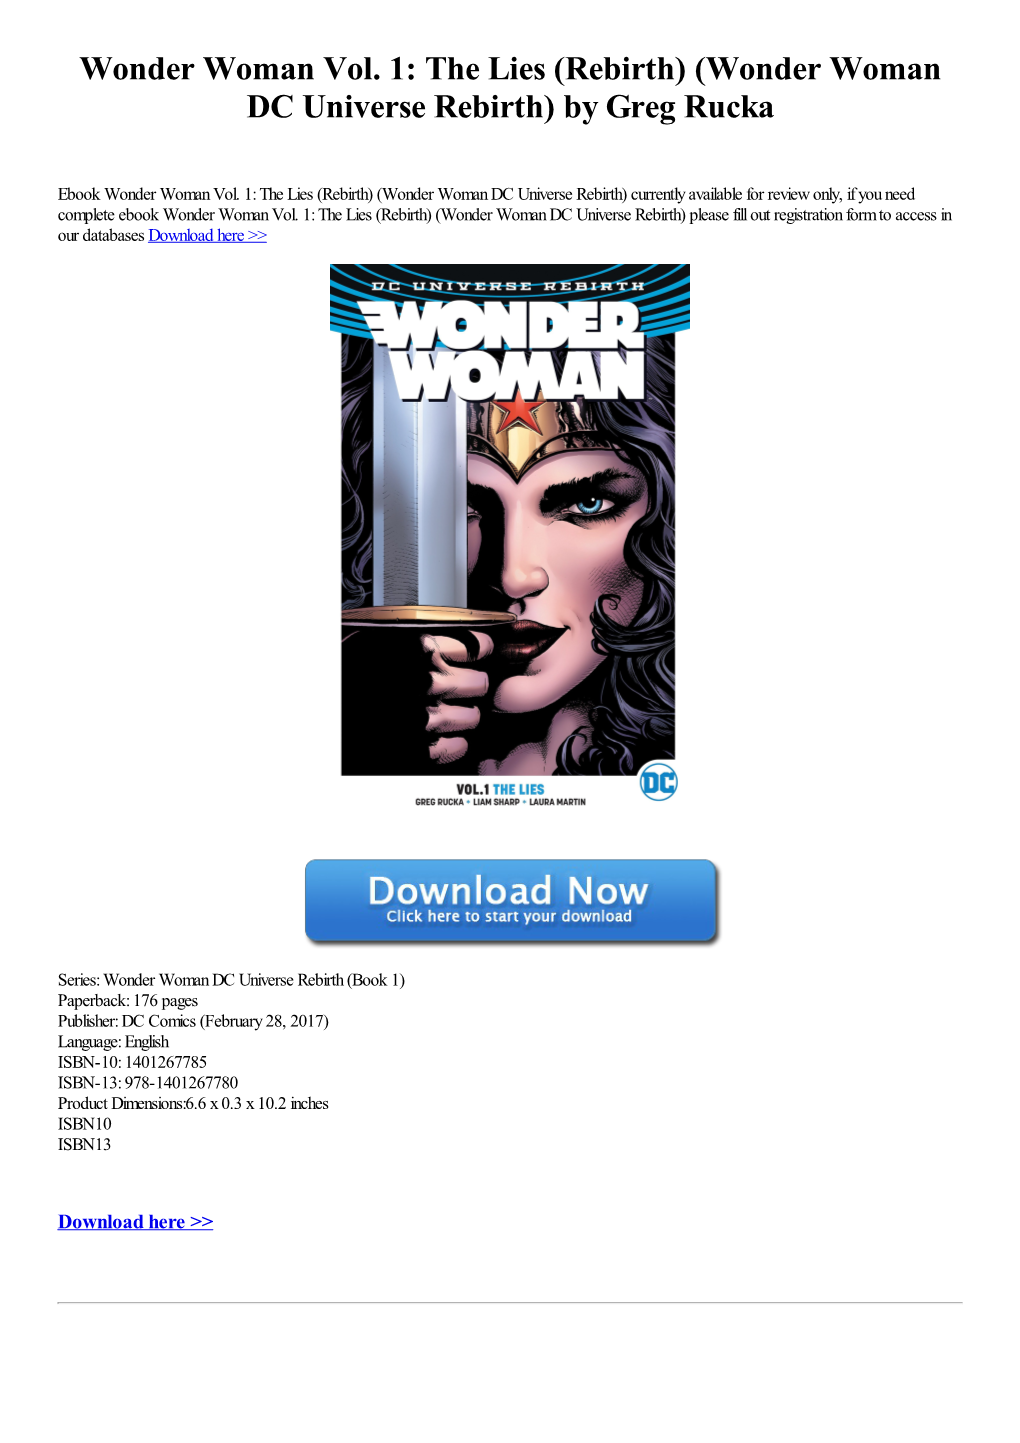 Wonder Woman DC Universe Rebirth) by Greg Rucka